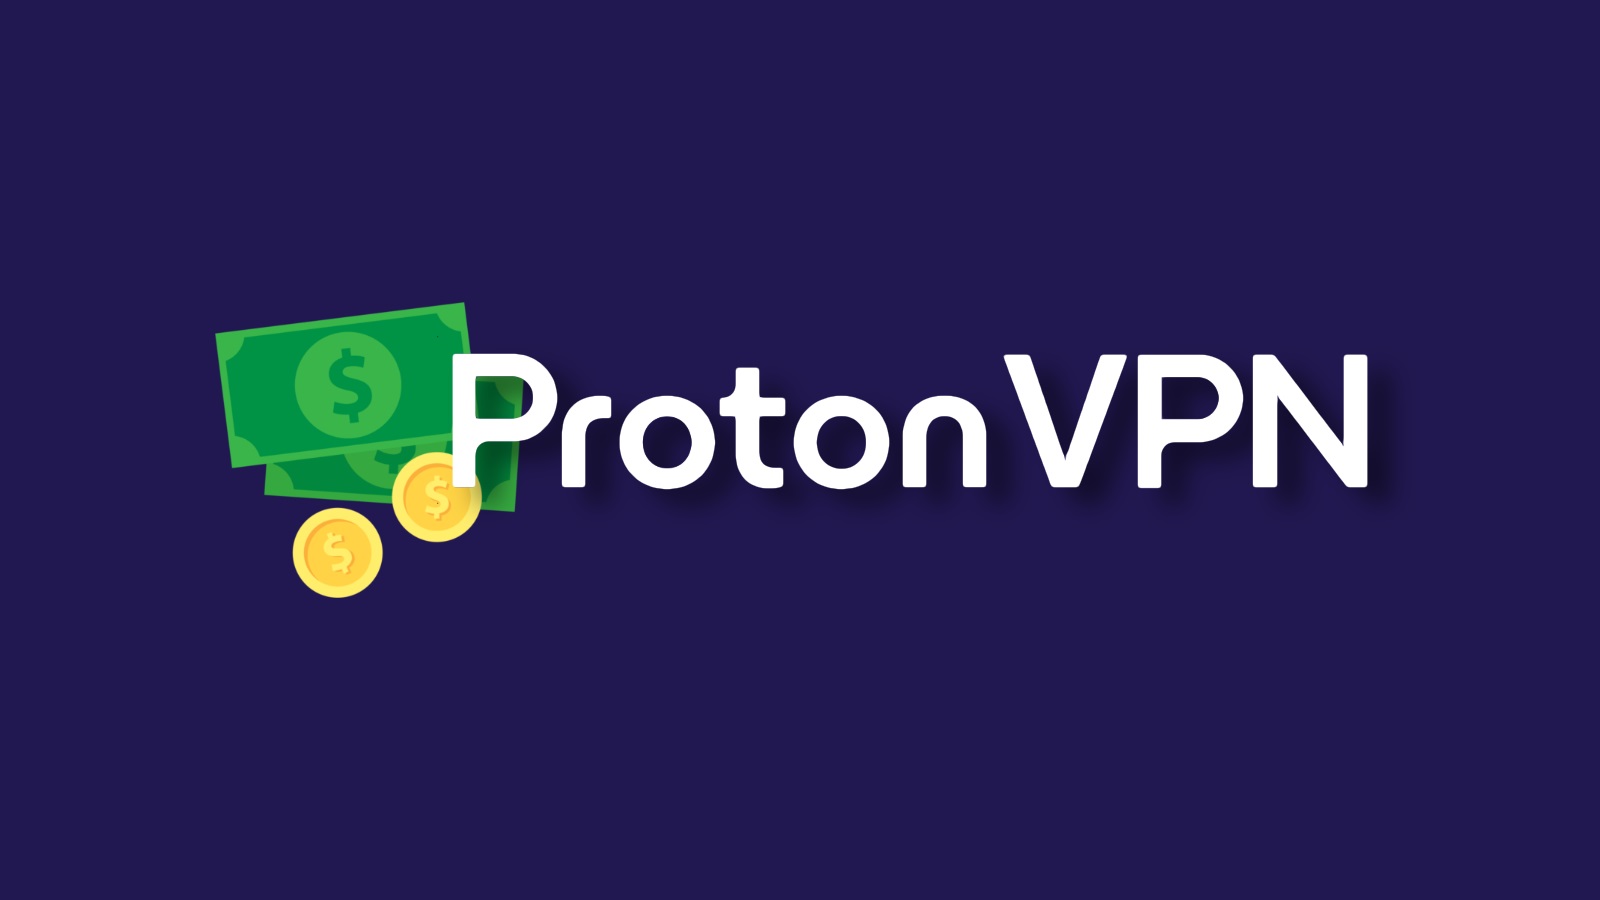 Proton VPN Refund: Get Your Money Back